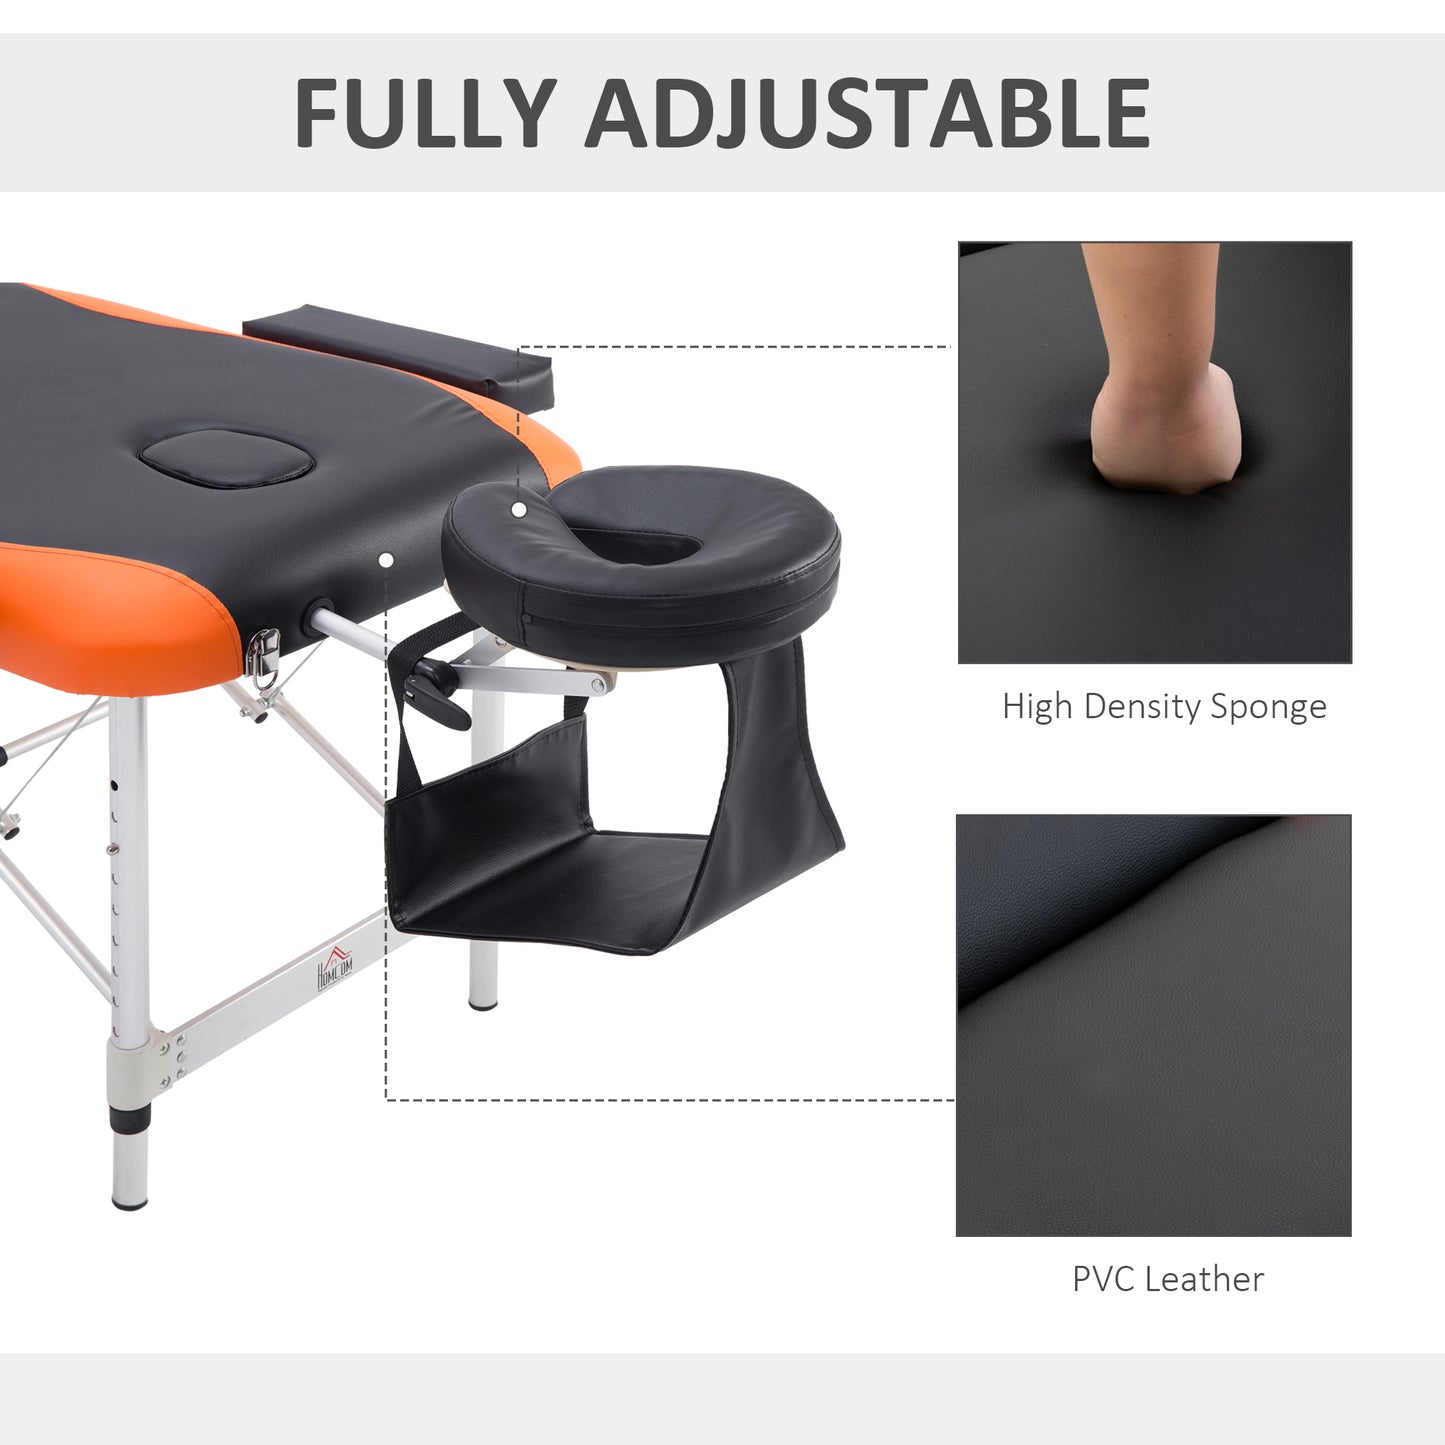 HOMCOM Professional Portable Massage Table W/Headrest-Black/Orange